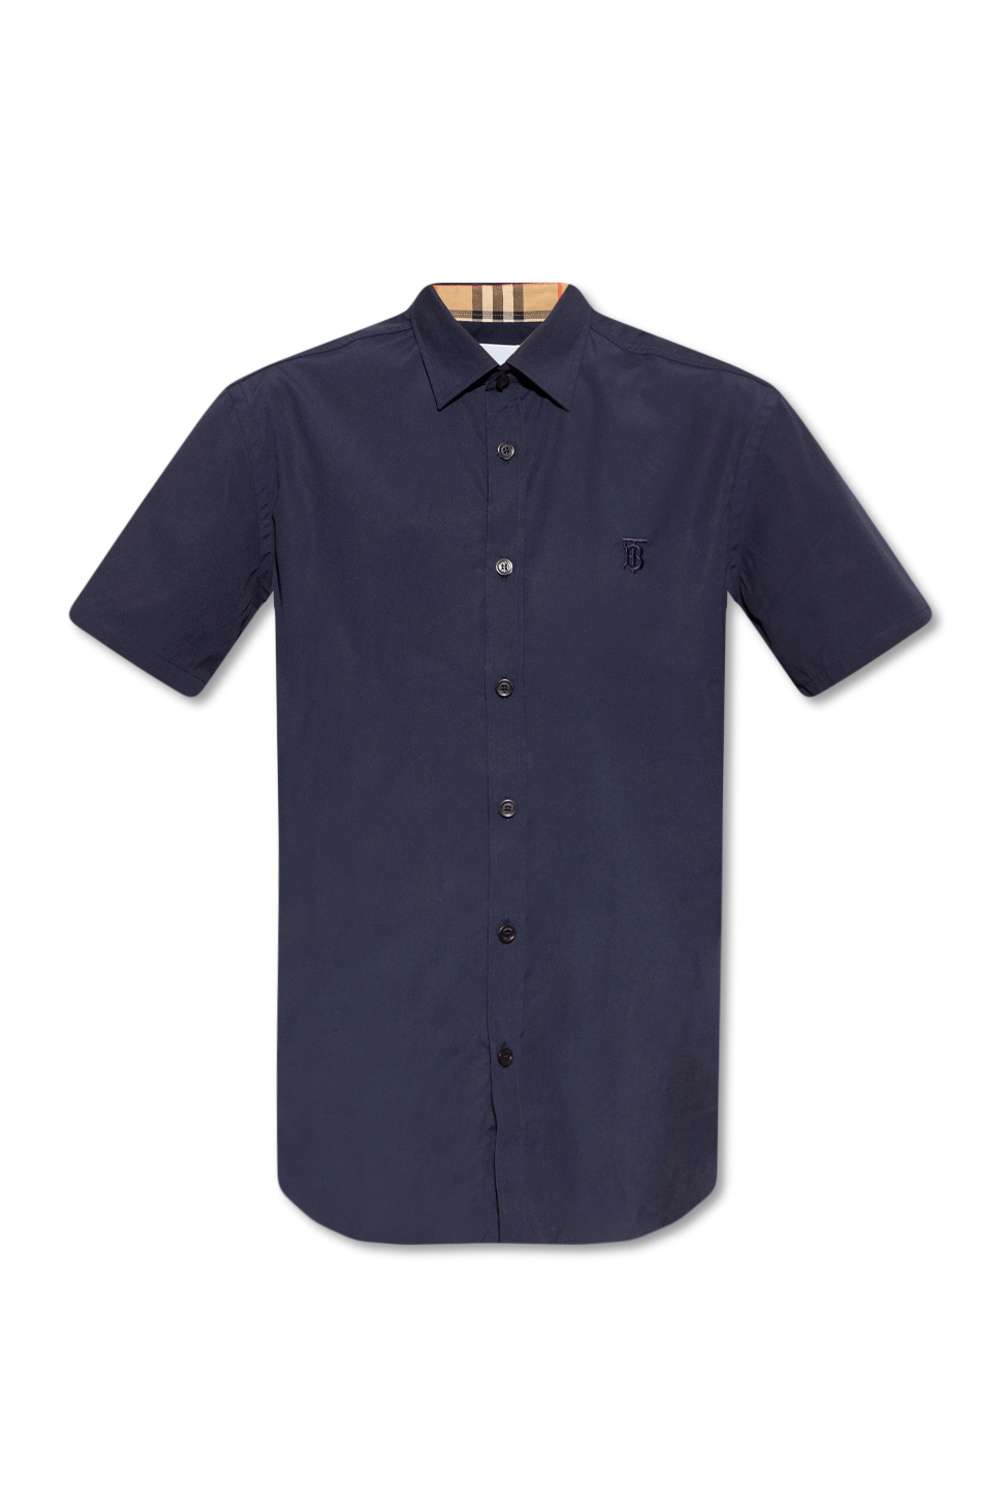 burberry dress ‘Sherwood’ short-sleeved shirt